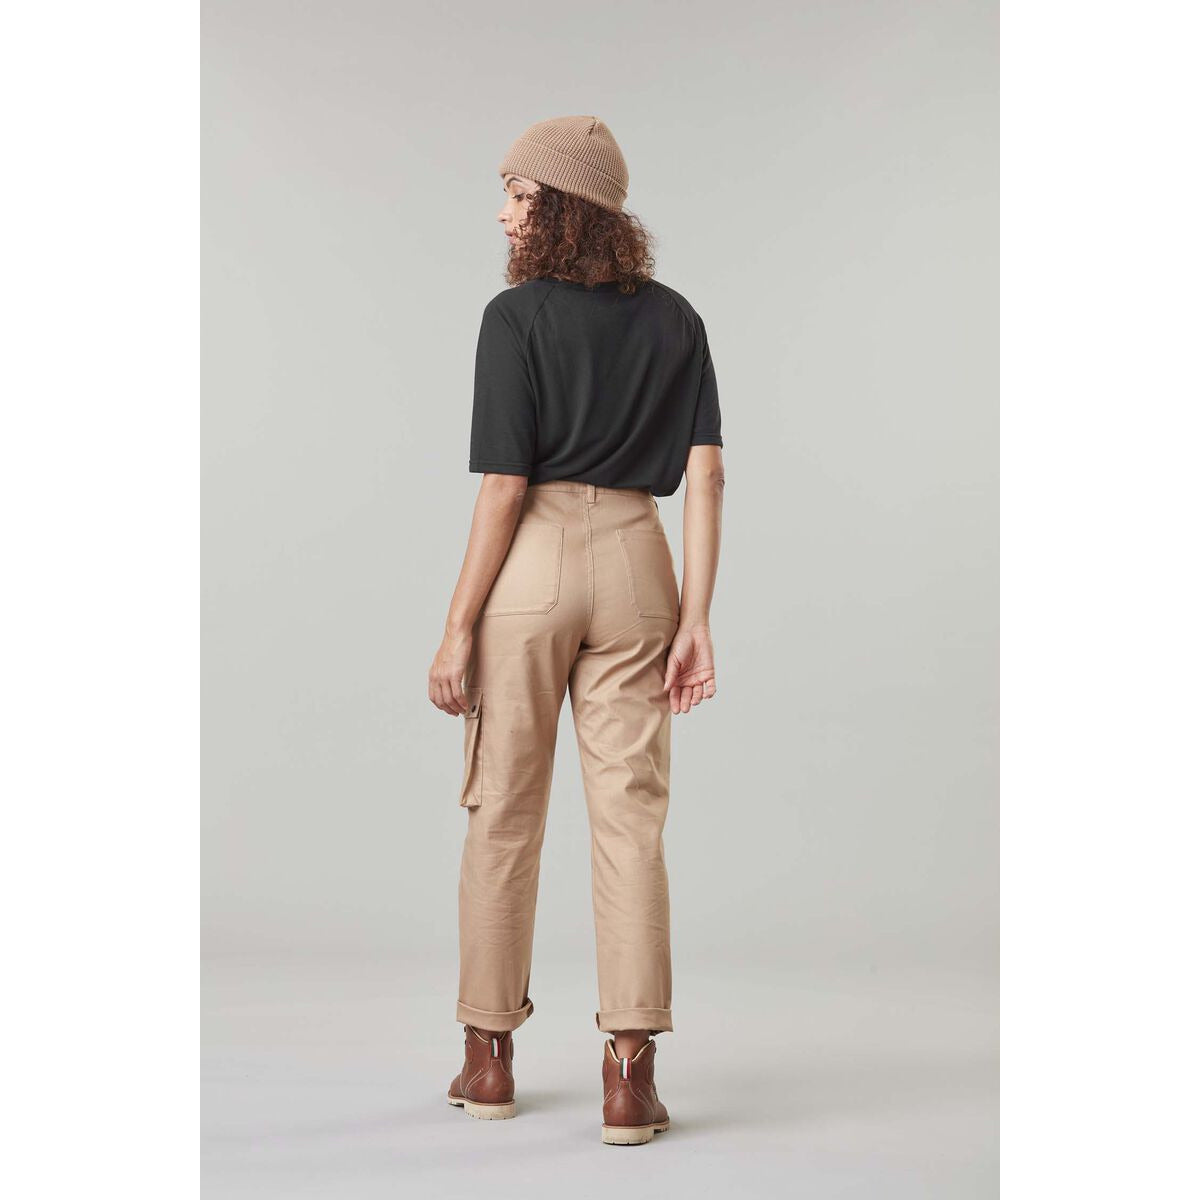 Tenova Pants for Women's